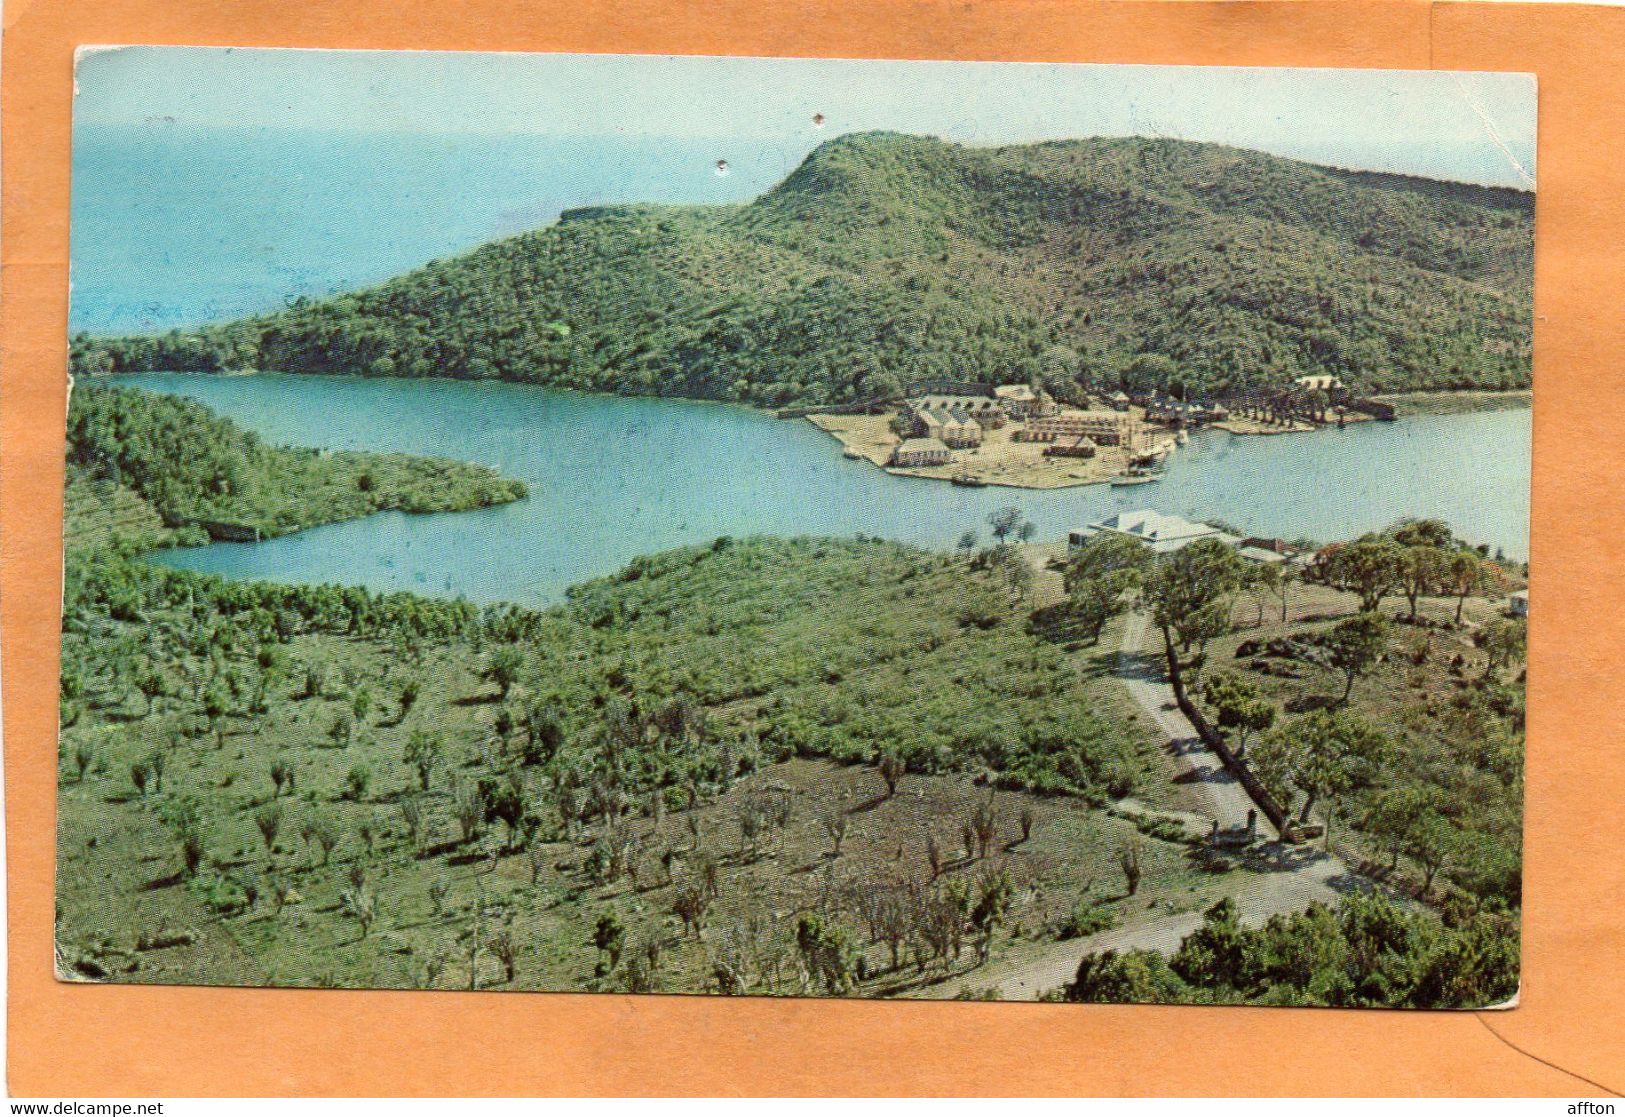 Antigua BWI Old Postcard Mailed - Antigua En Barbuda